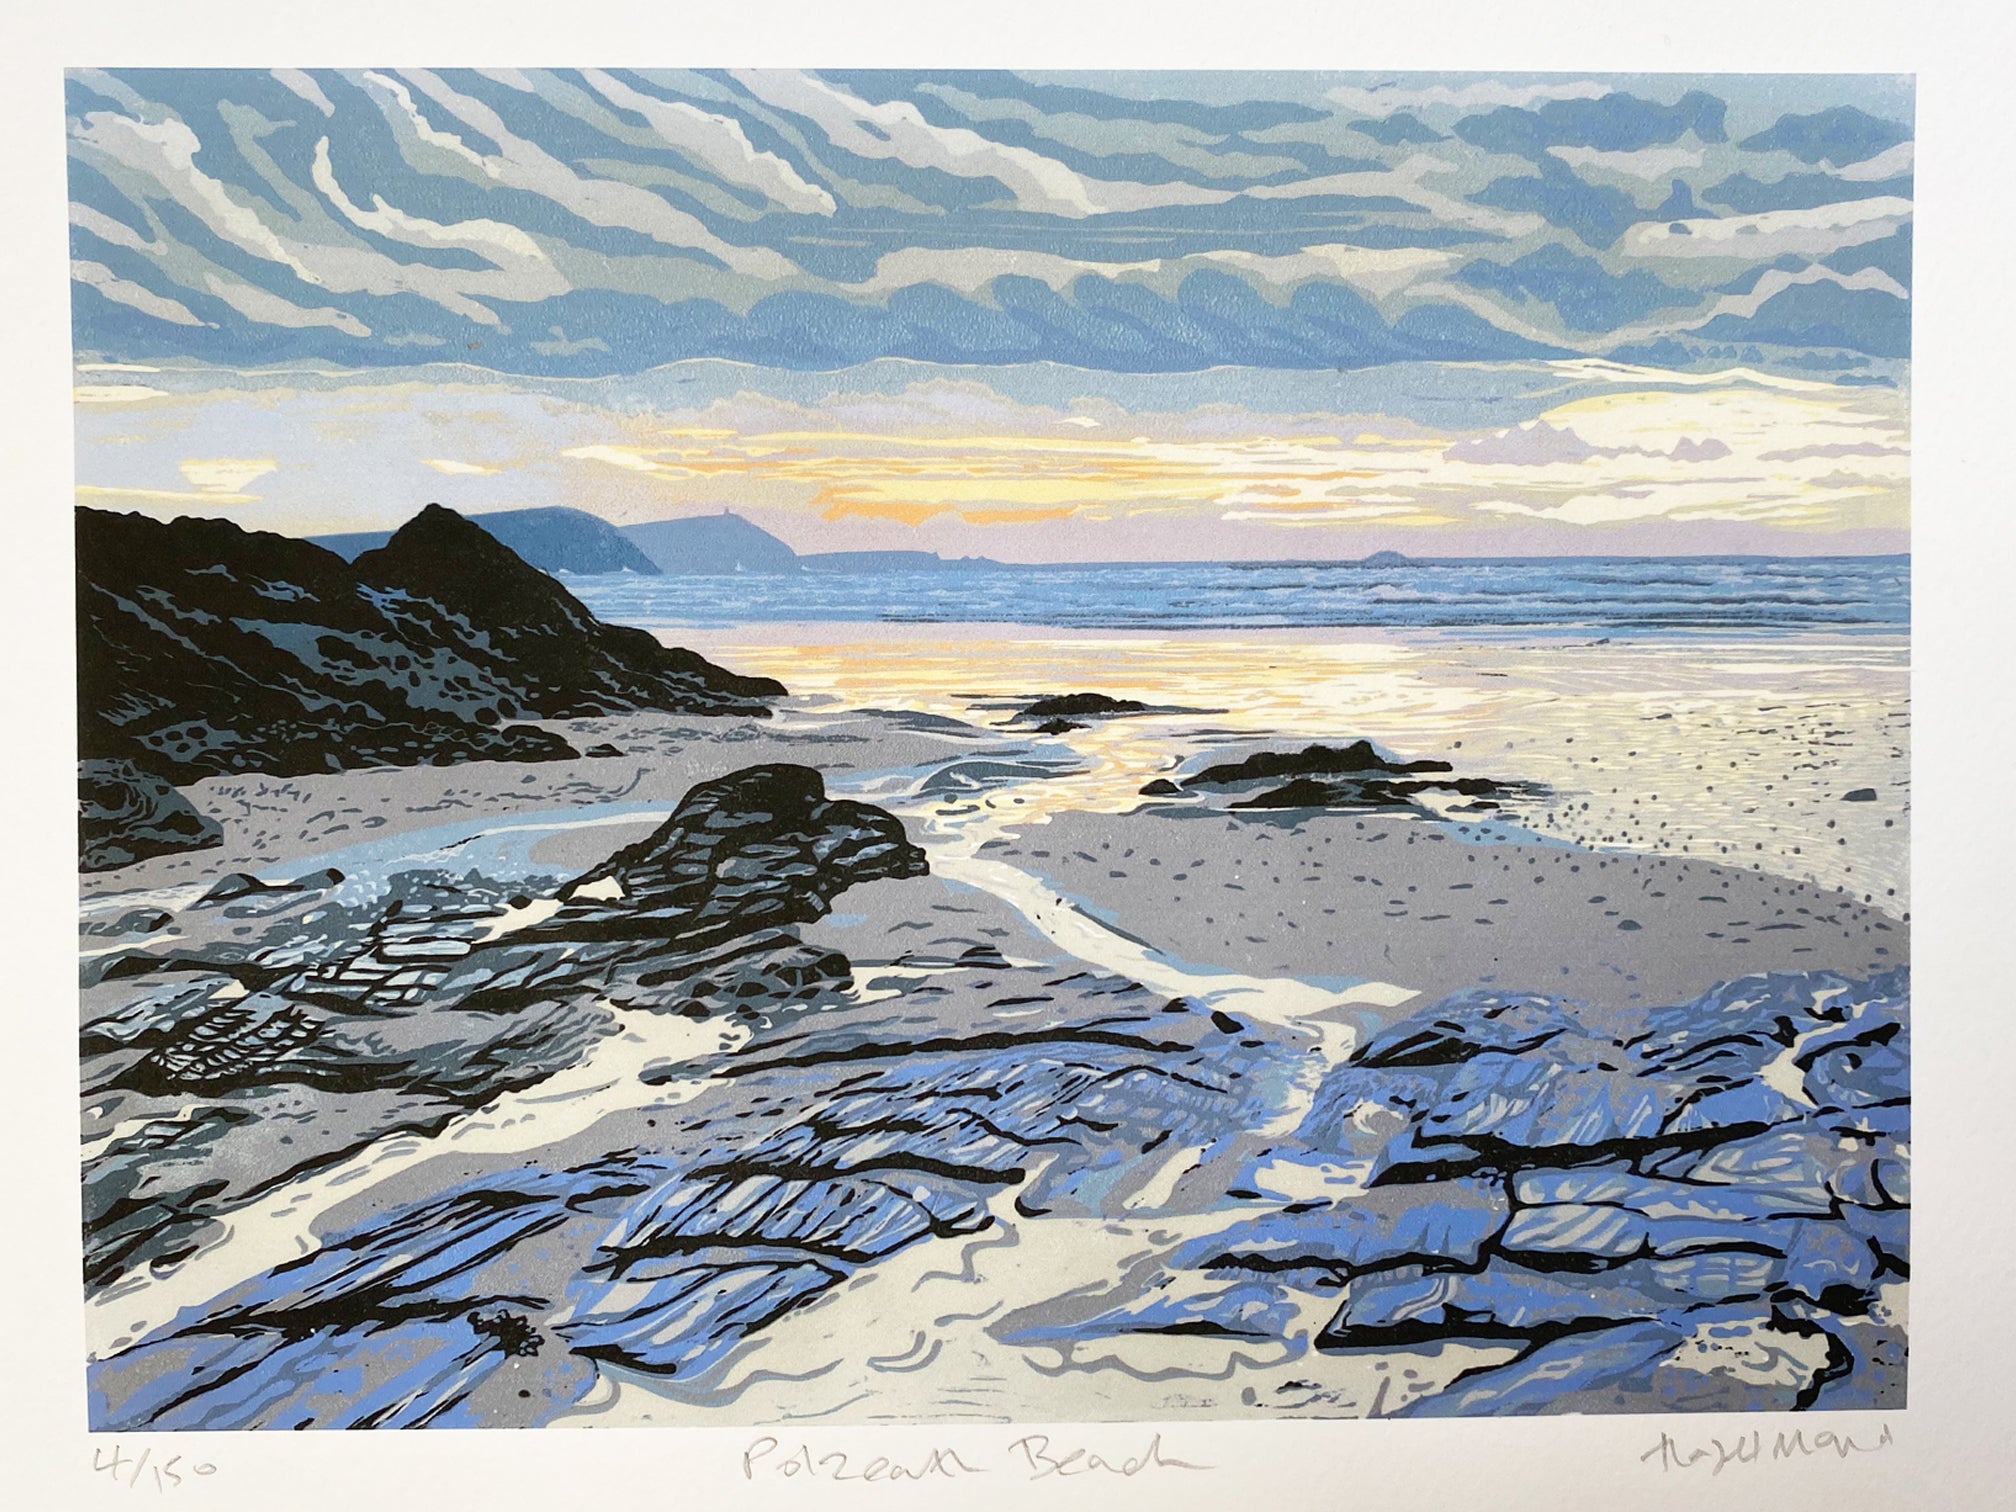 Giclee print original size - Polzeath Beach